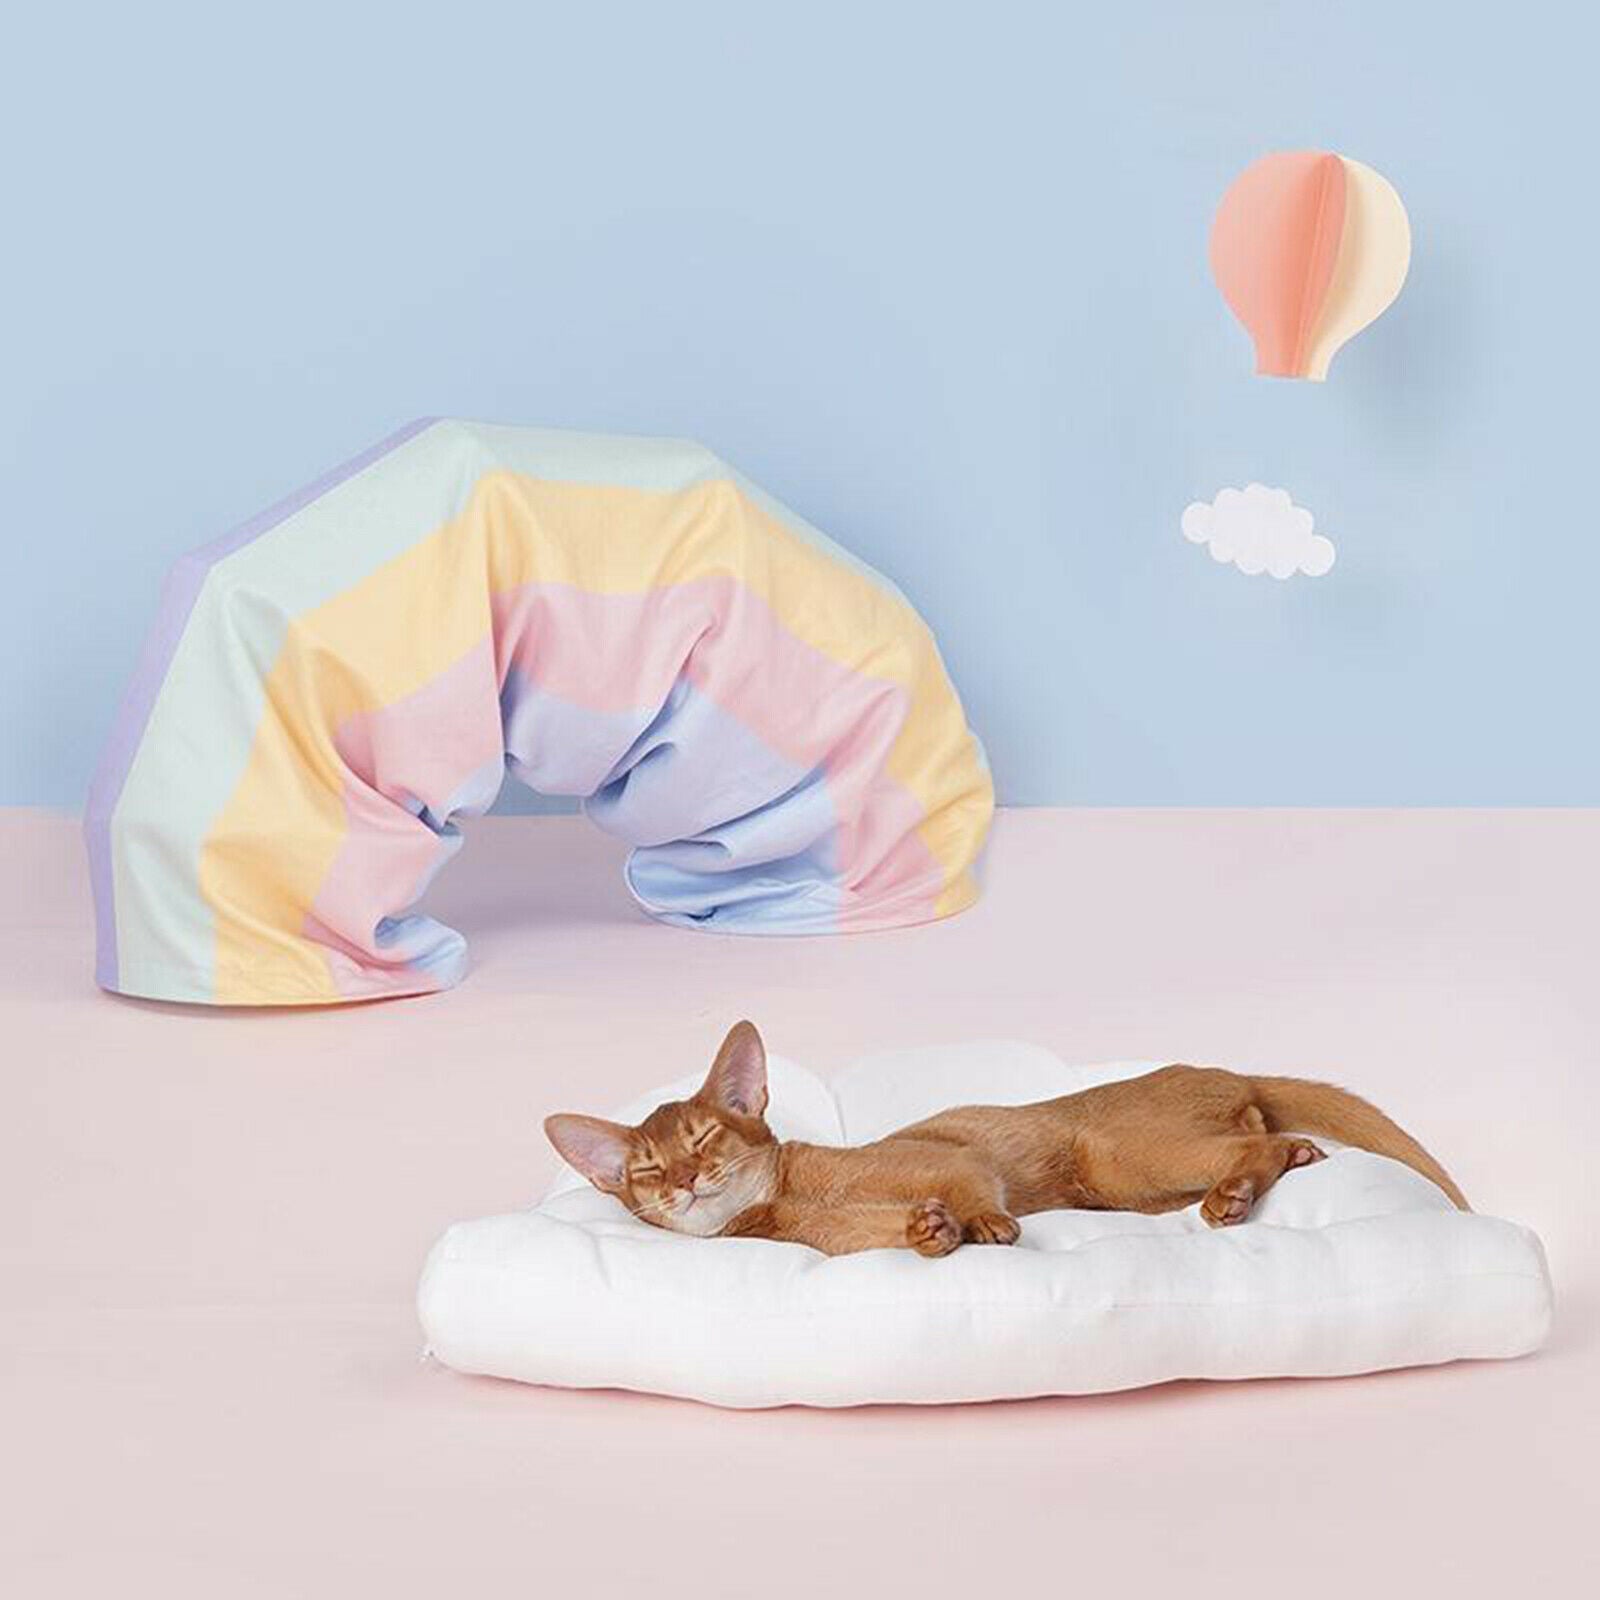 Pet Plush Warm Bed Mattress Dog Cats Blanket Sleeping Bed Cushion Mat House Nest